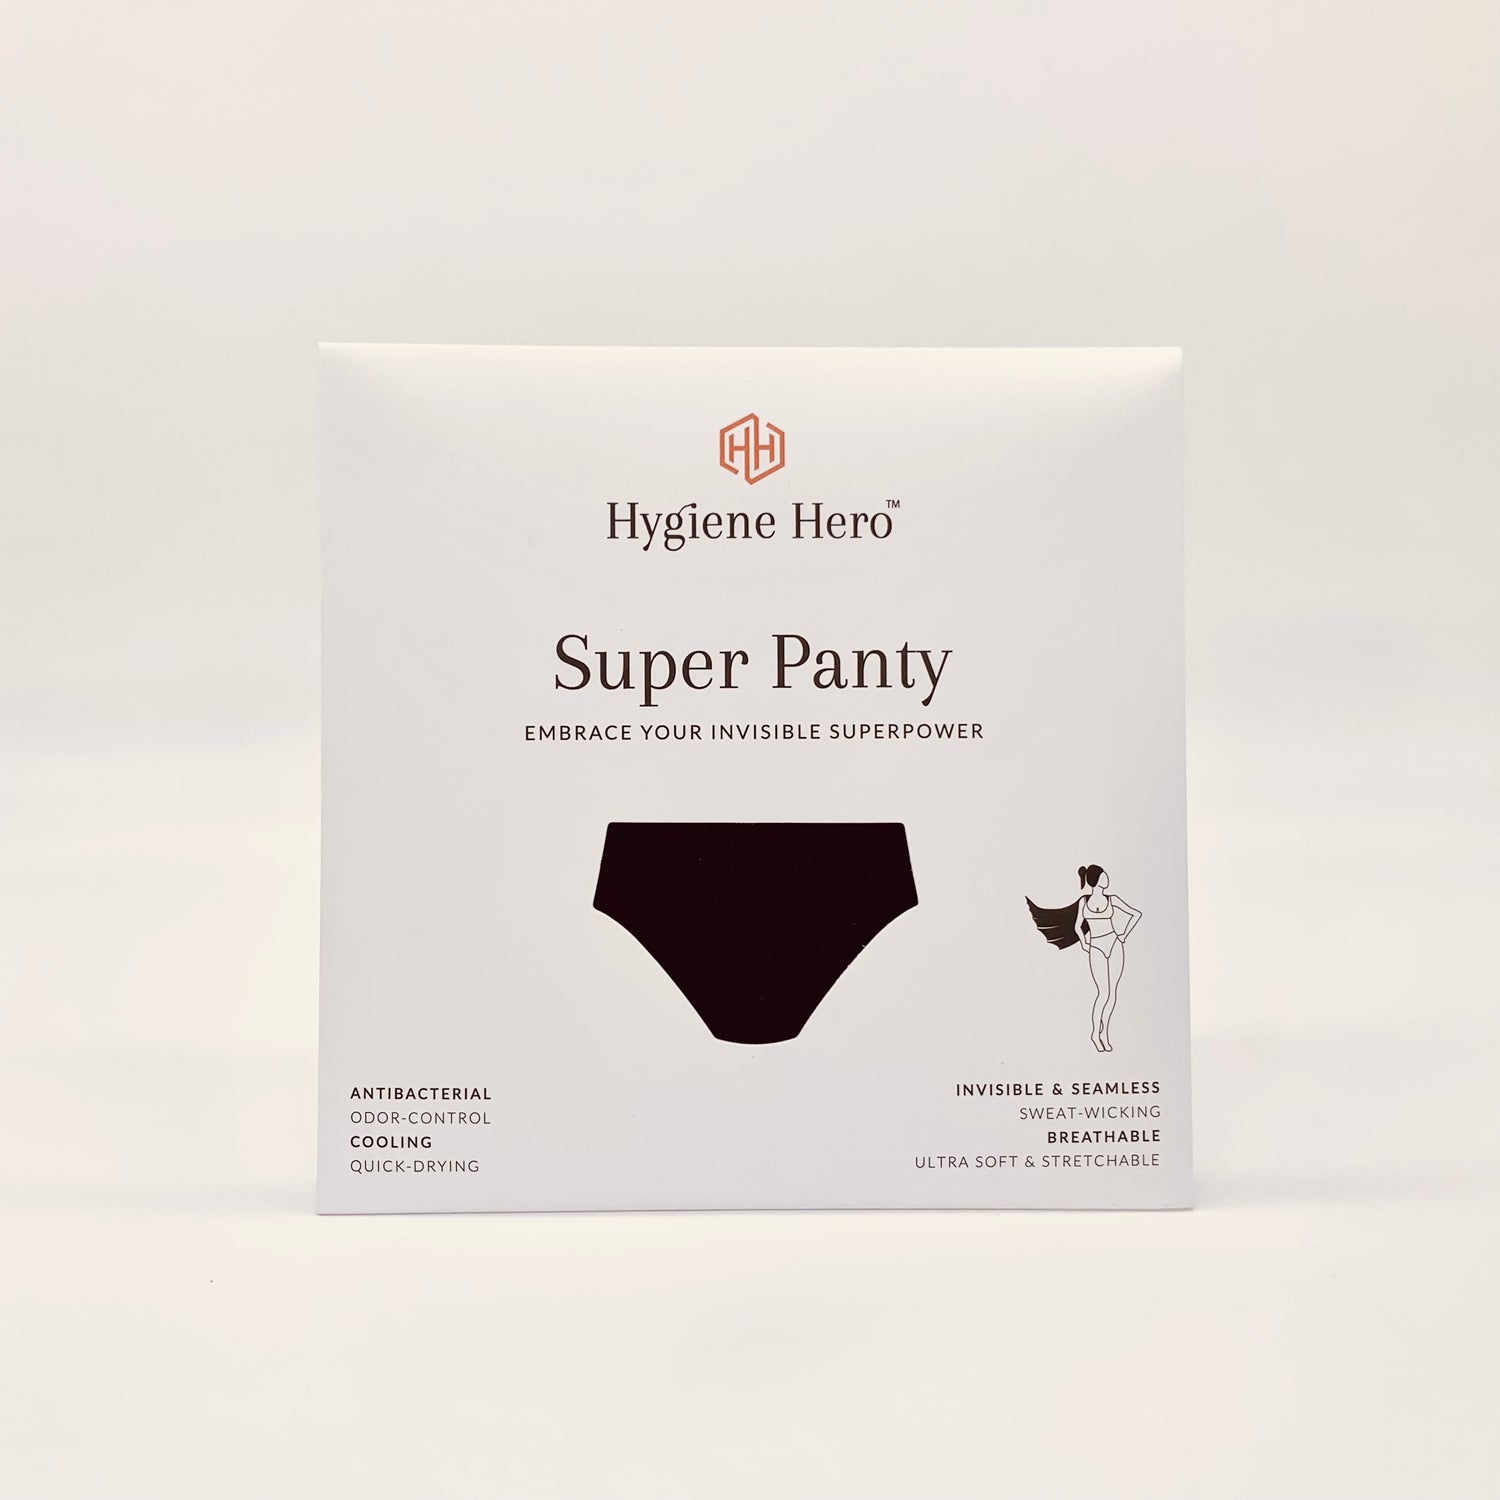 Super Panty – Hygiene Hero